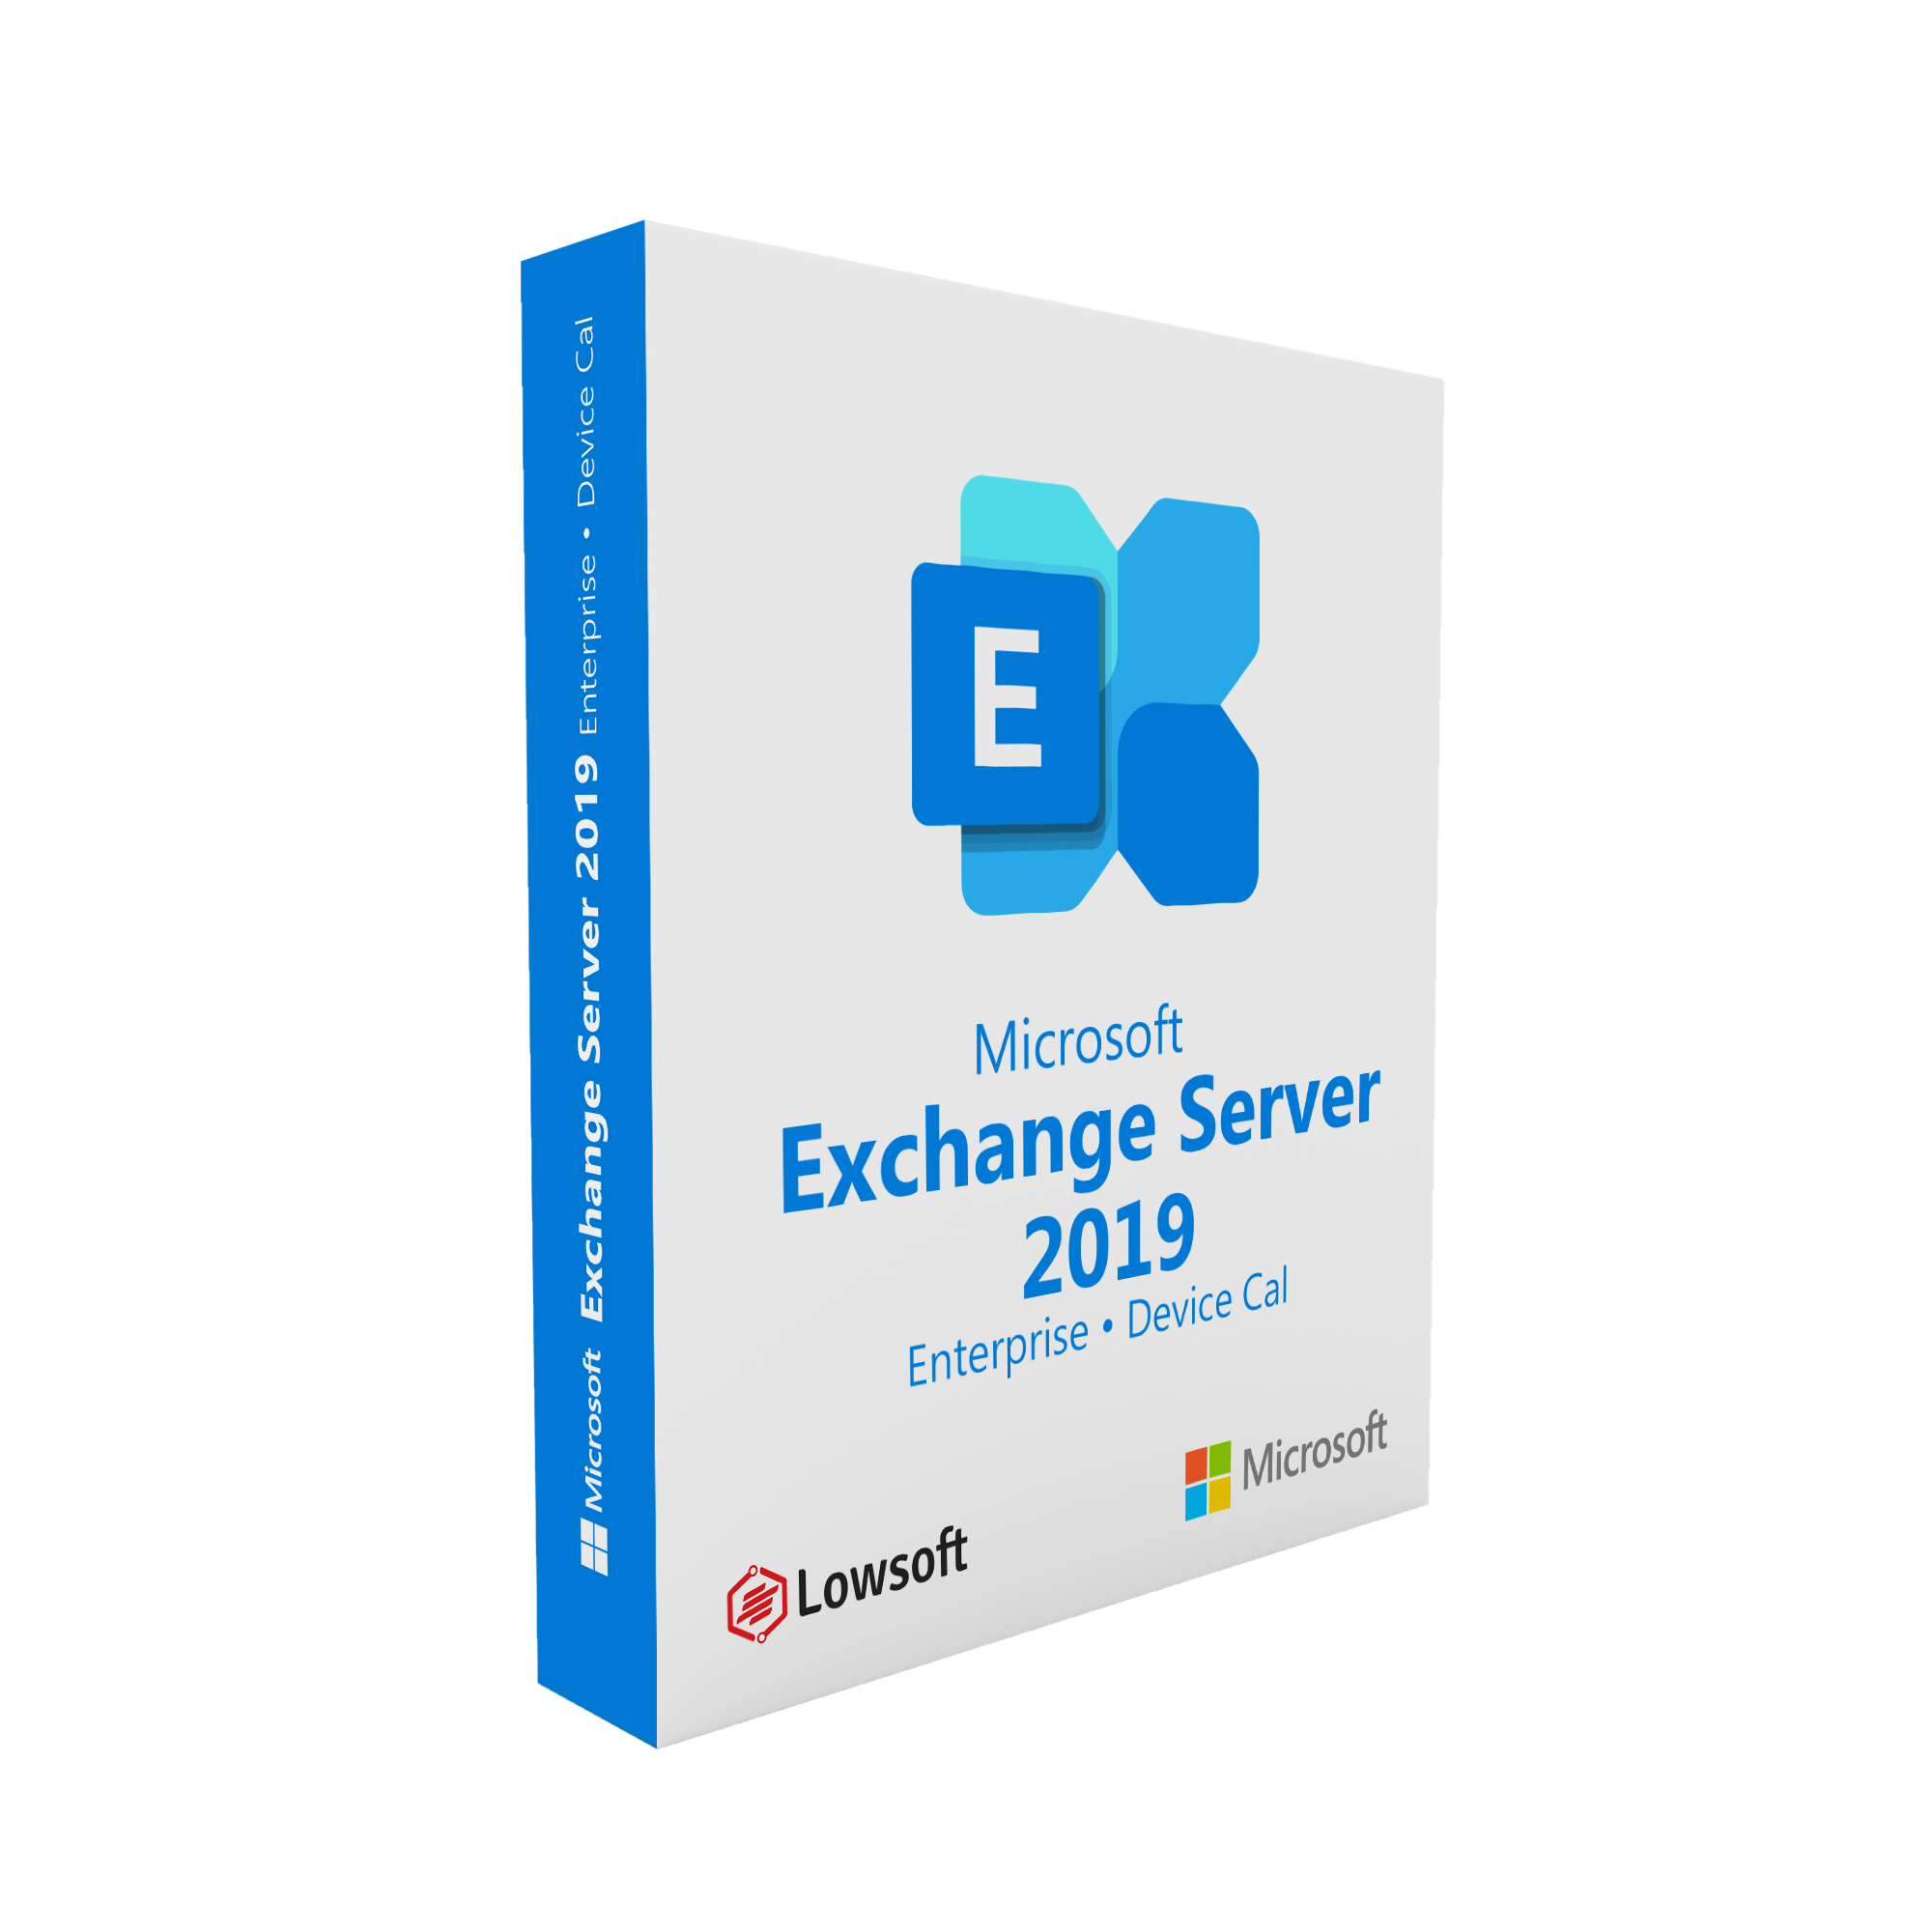 Exchange Server 2019 Enterprise Device CAL